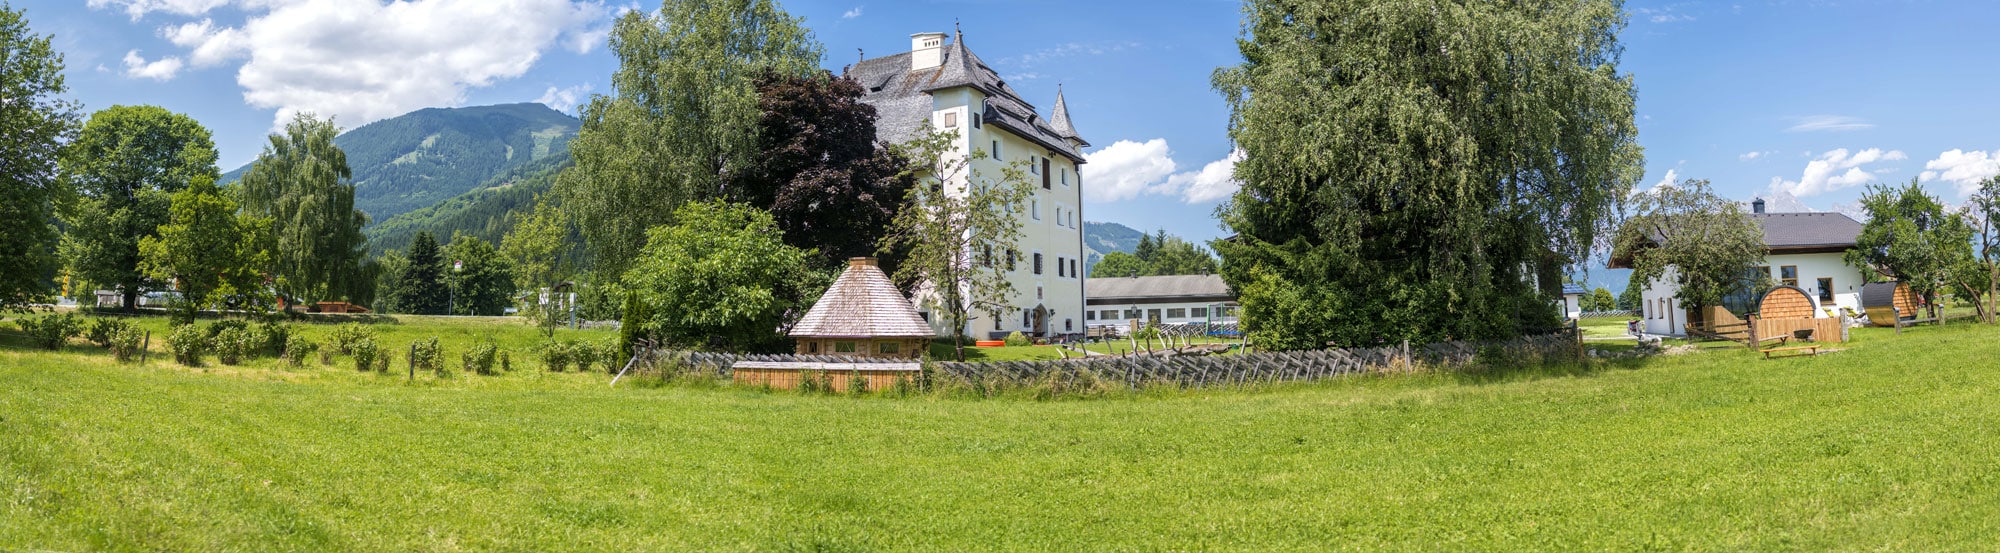 Schloss Saalhof Maishofen